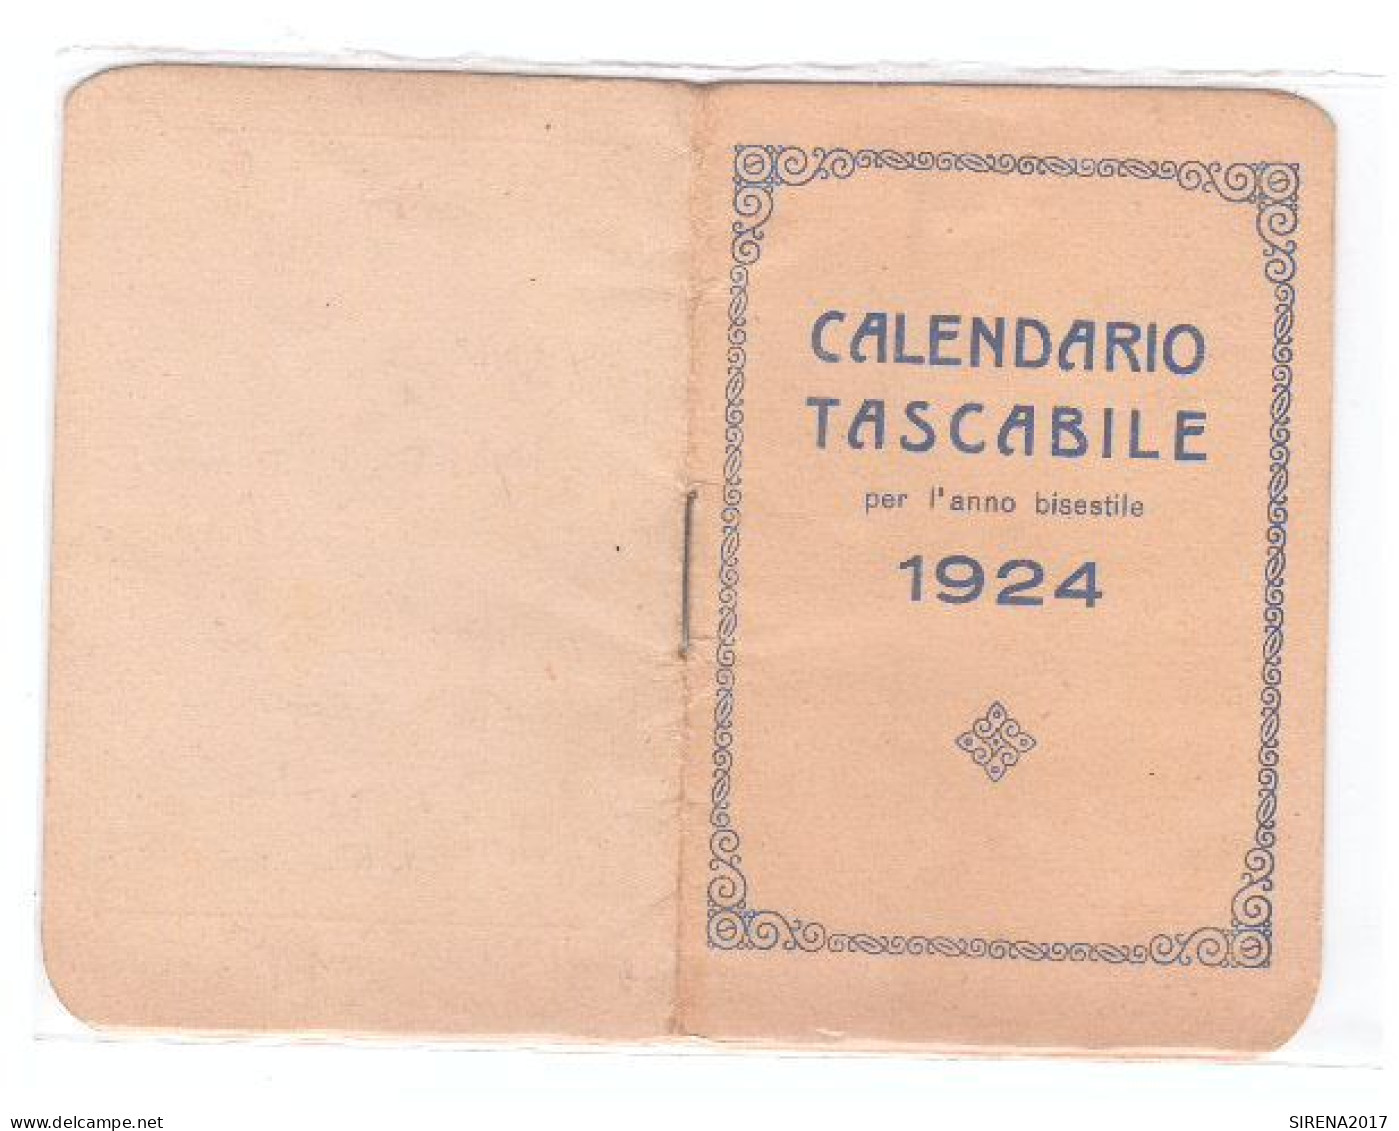 CALENDARIO TASCABILE PER L'ANNO BISESTILE 1924 - Klein Formaat: 1961-70